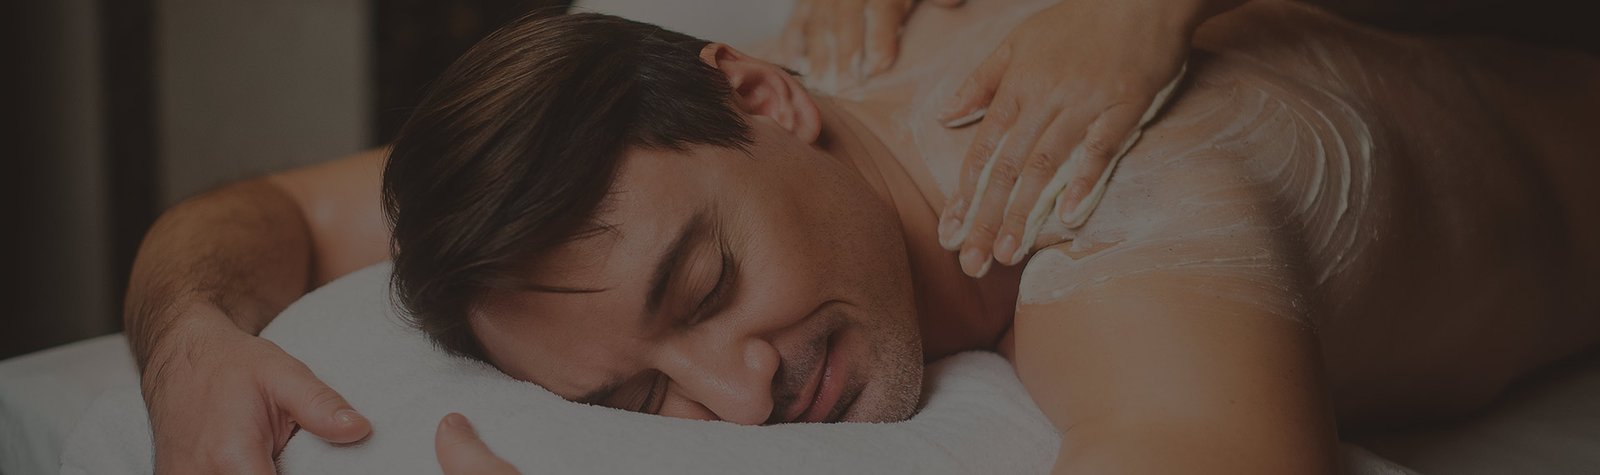 body to body massage in mahipalpur delhi